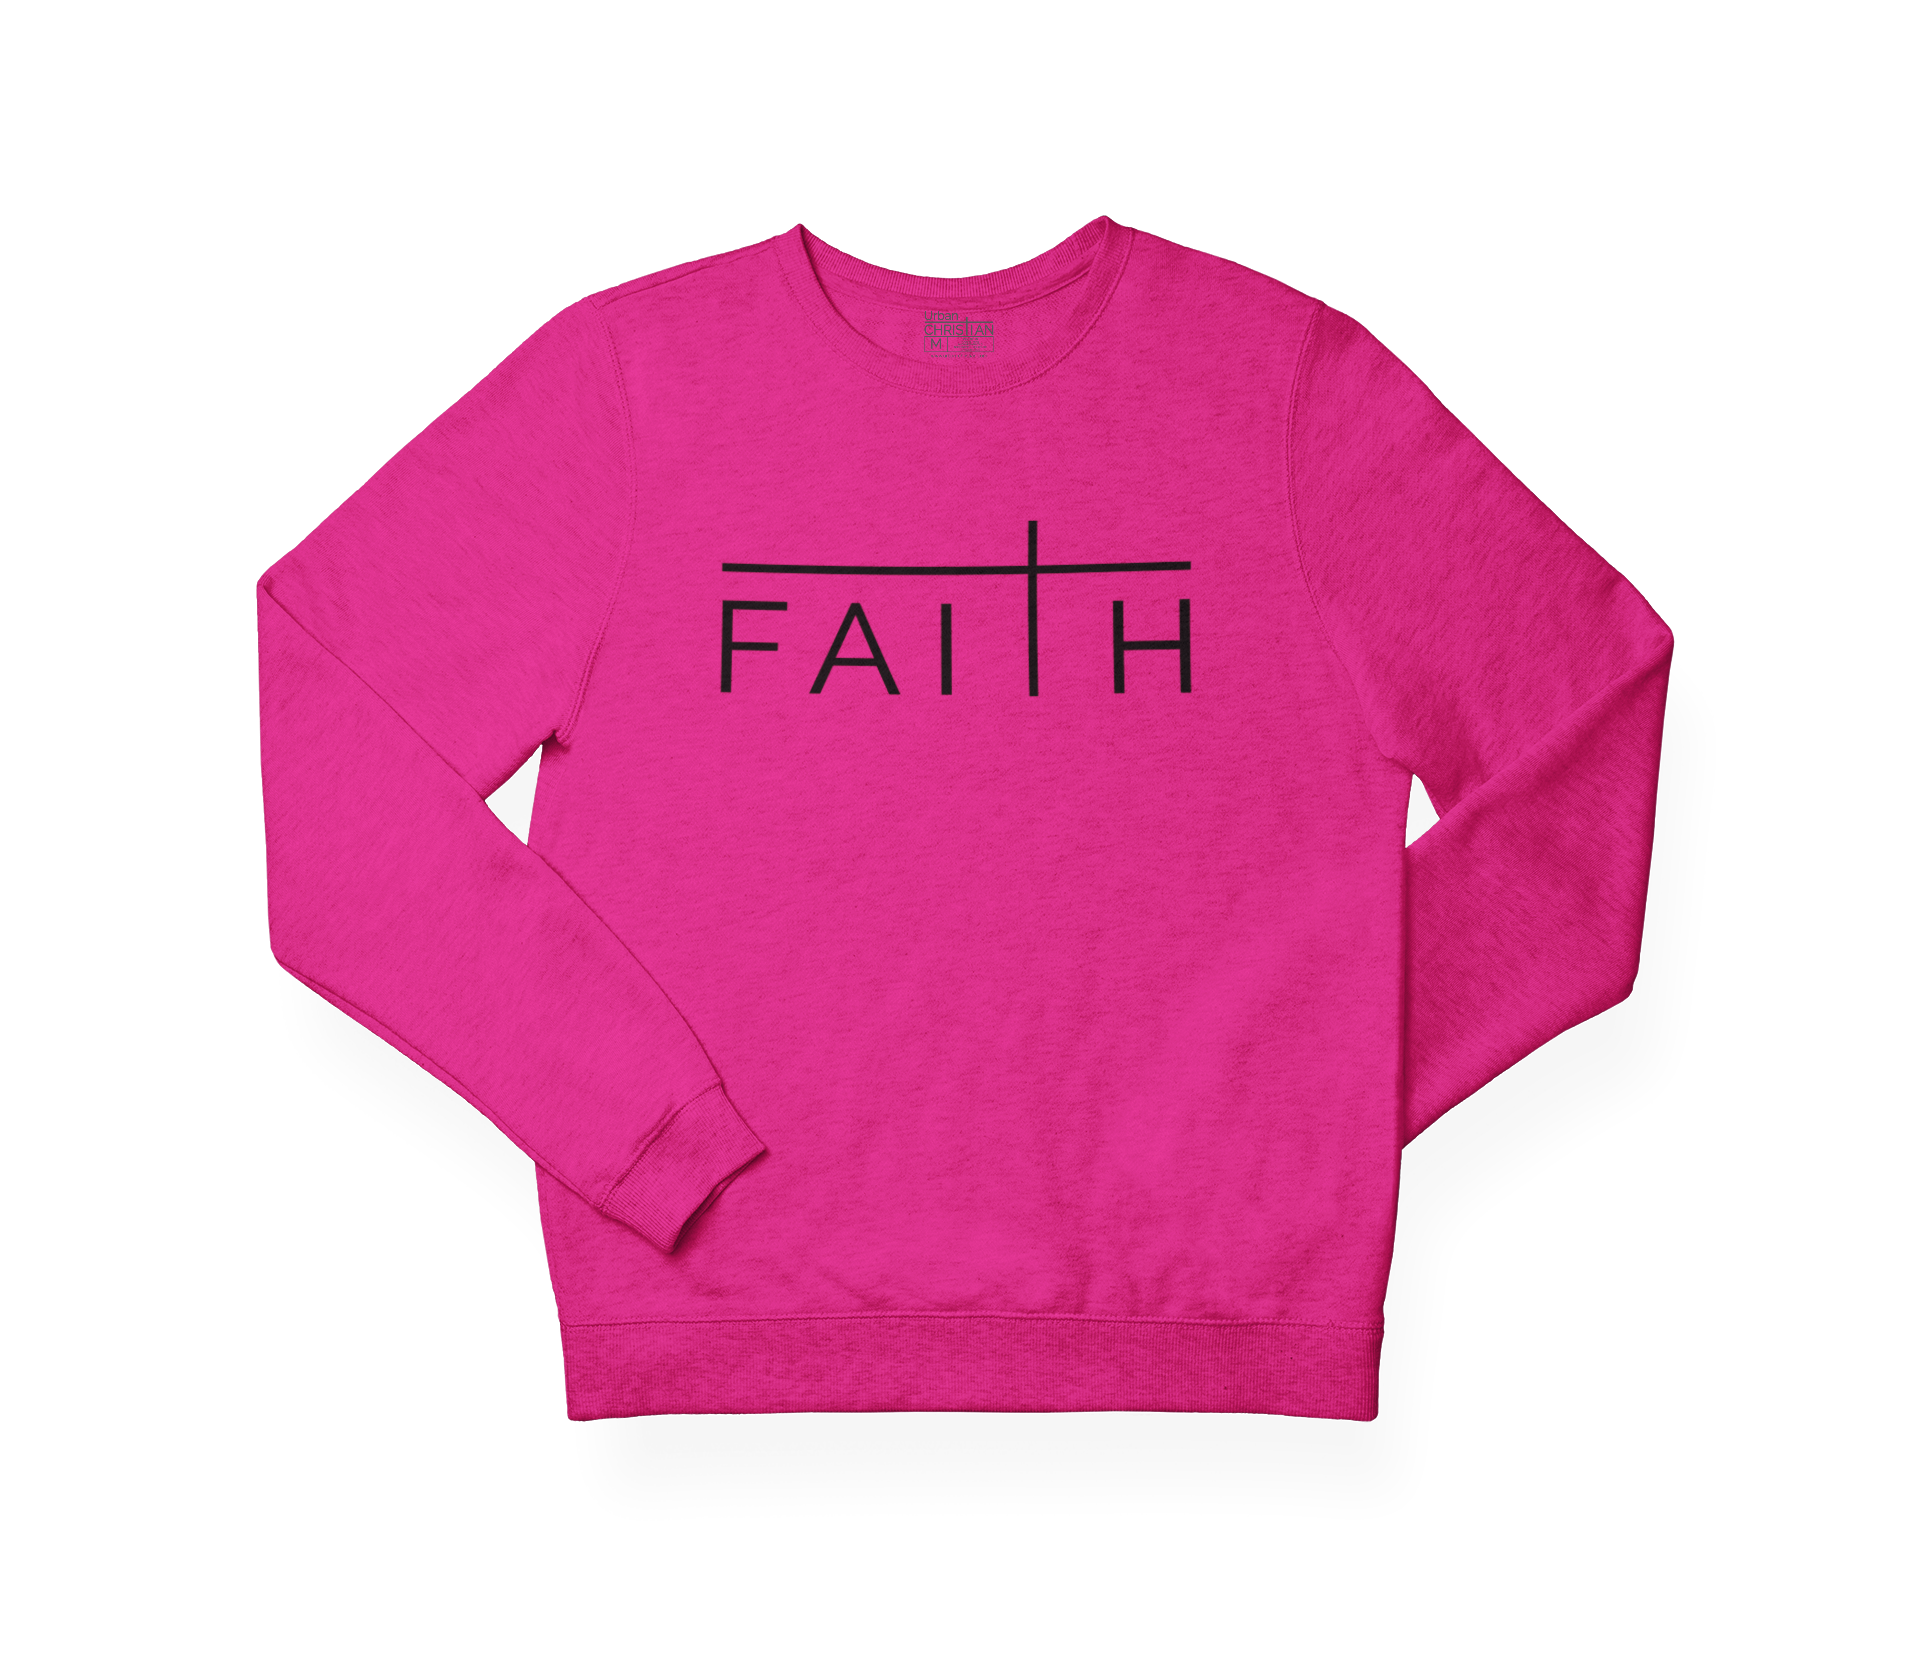 FAITH SWEATSHIRT- PINK